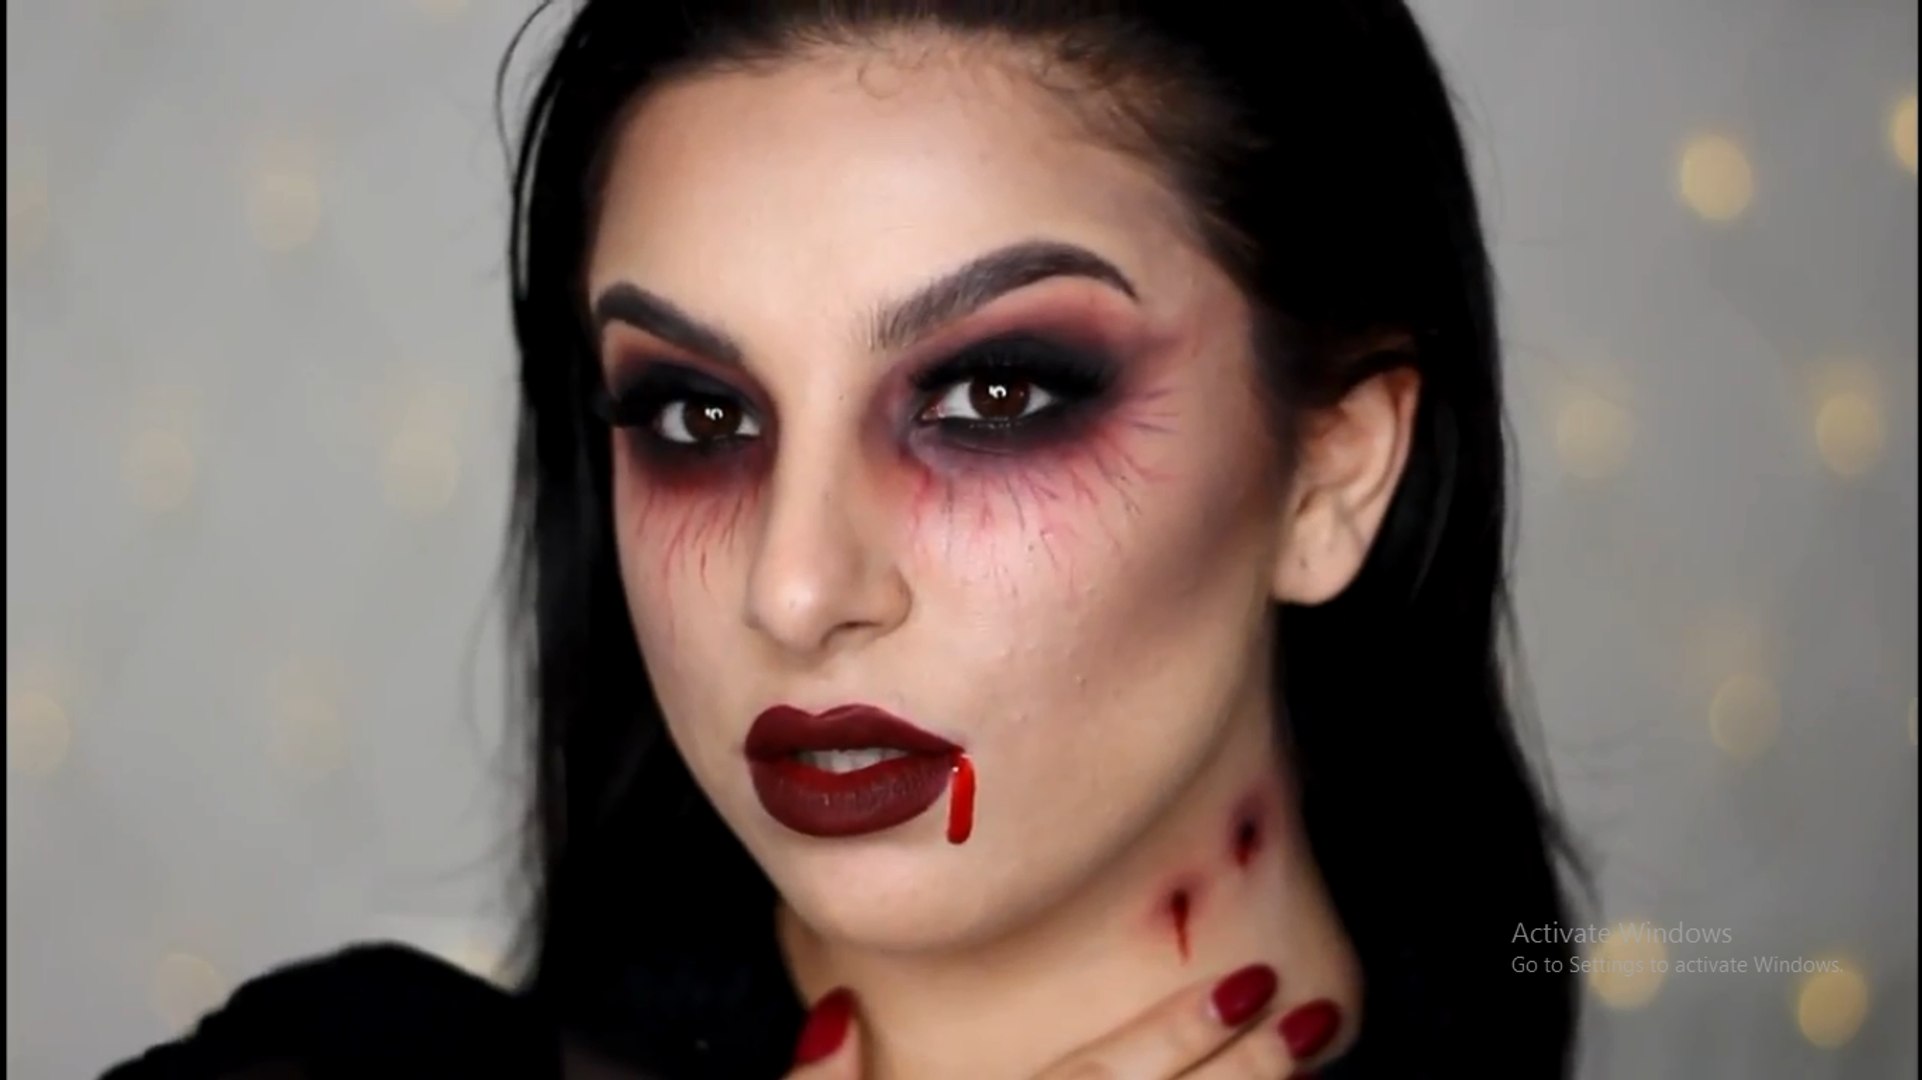 lukker grube Fryse Vampire Look with Halloween Costumes - Halloween Makeup Tutorial - video  Dailymotion